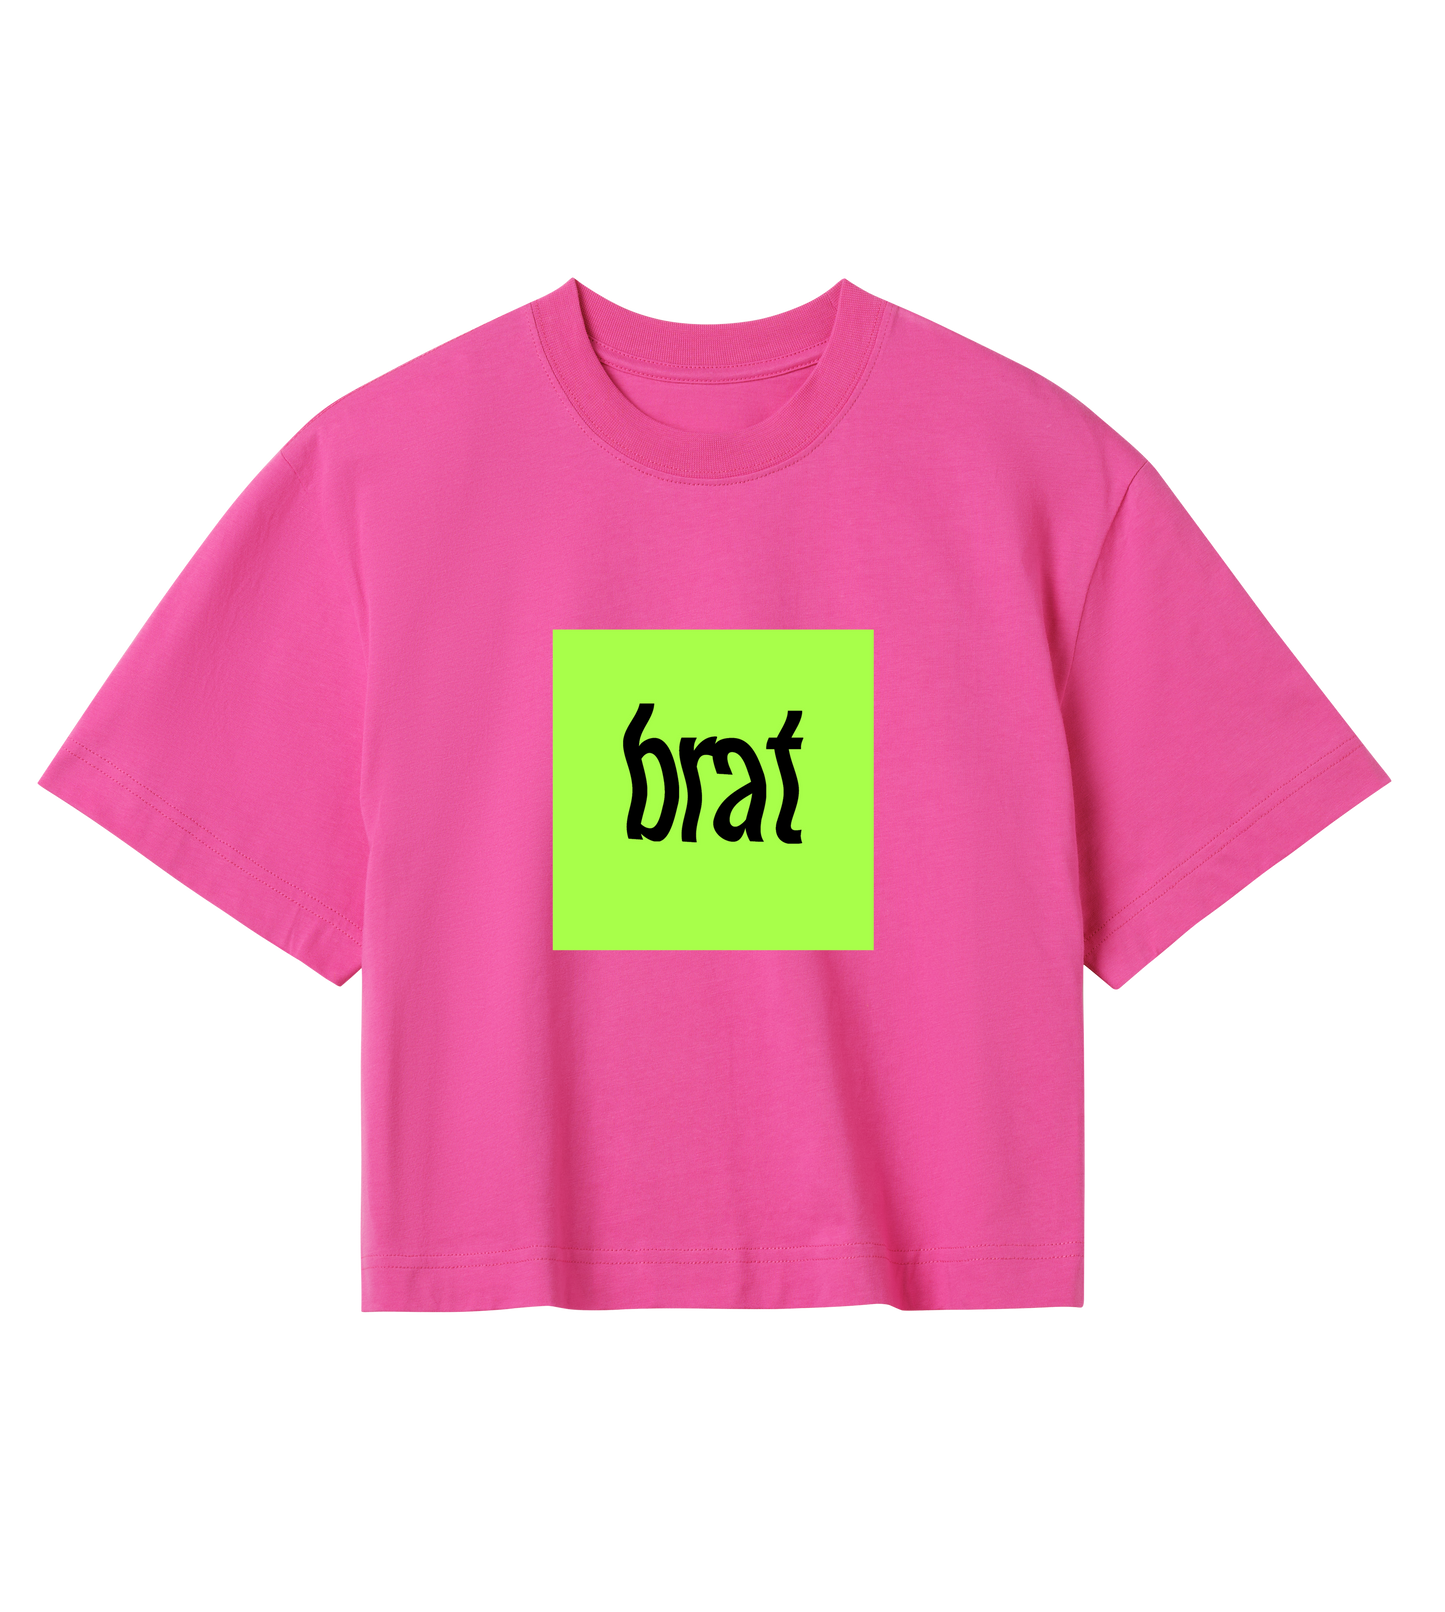 Brat Pride Shirt - Celebrating Charli XCX's Latest Album